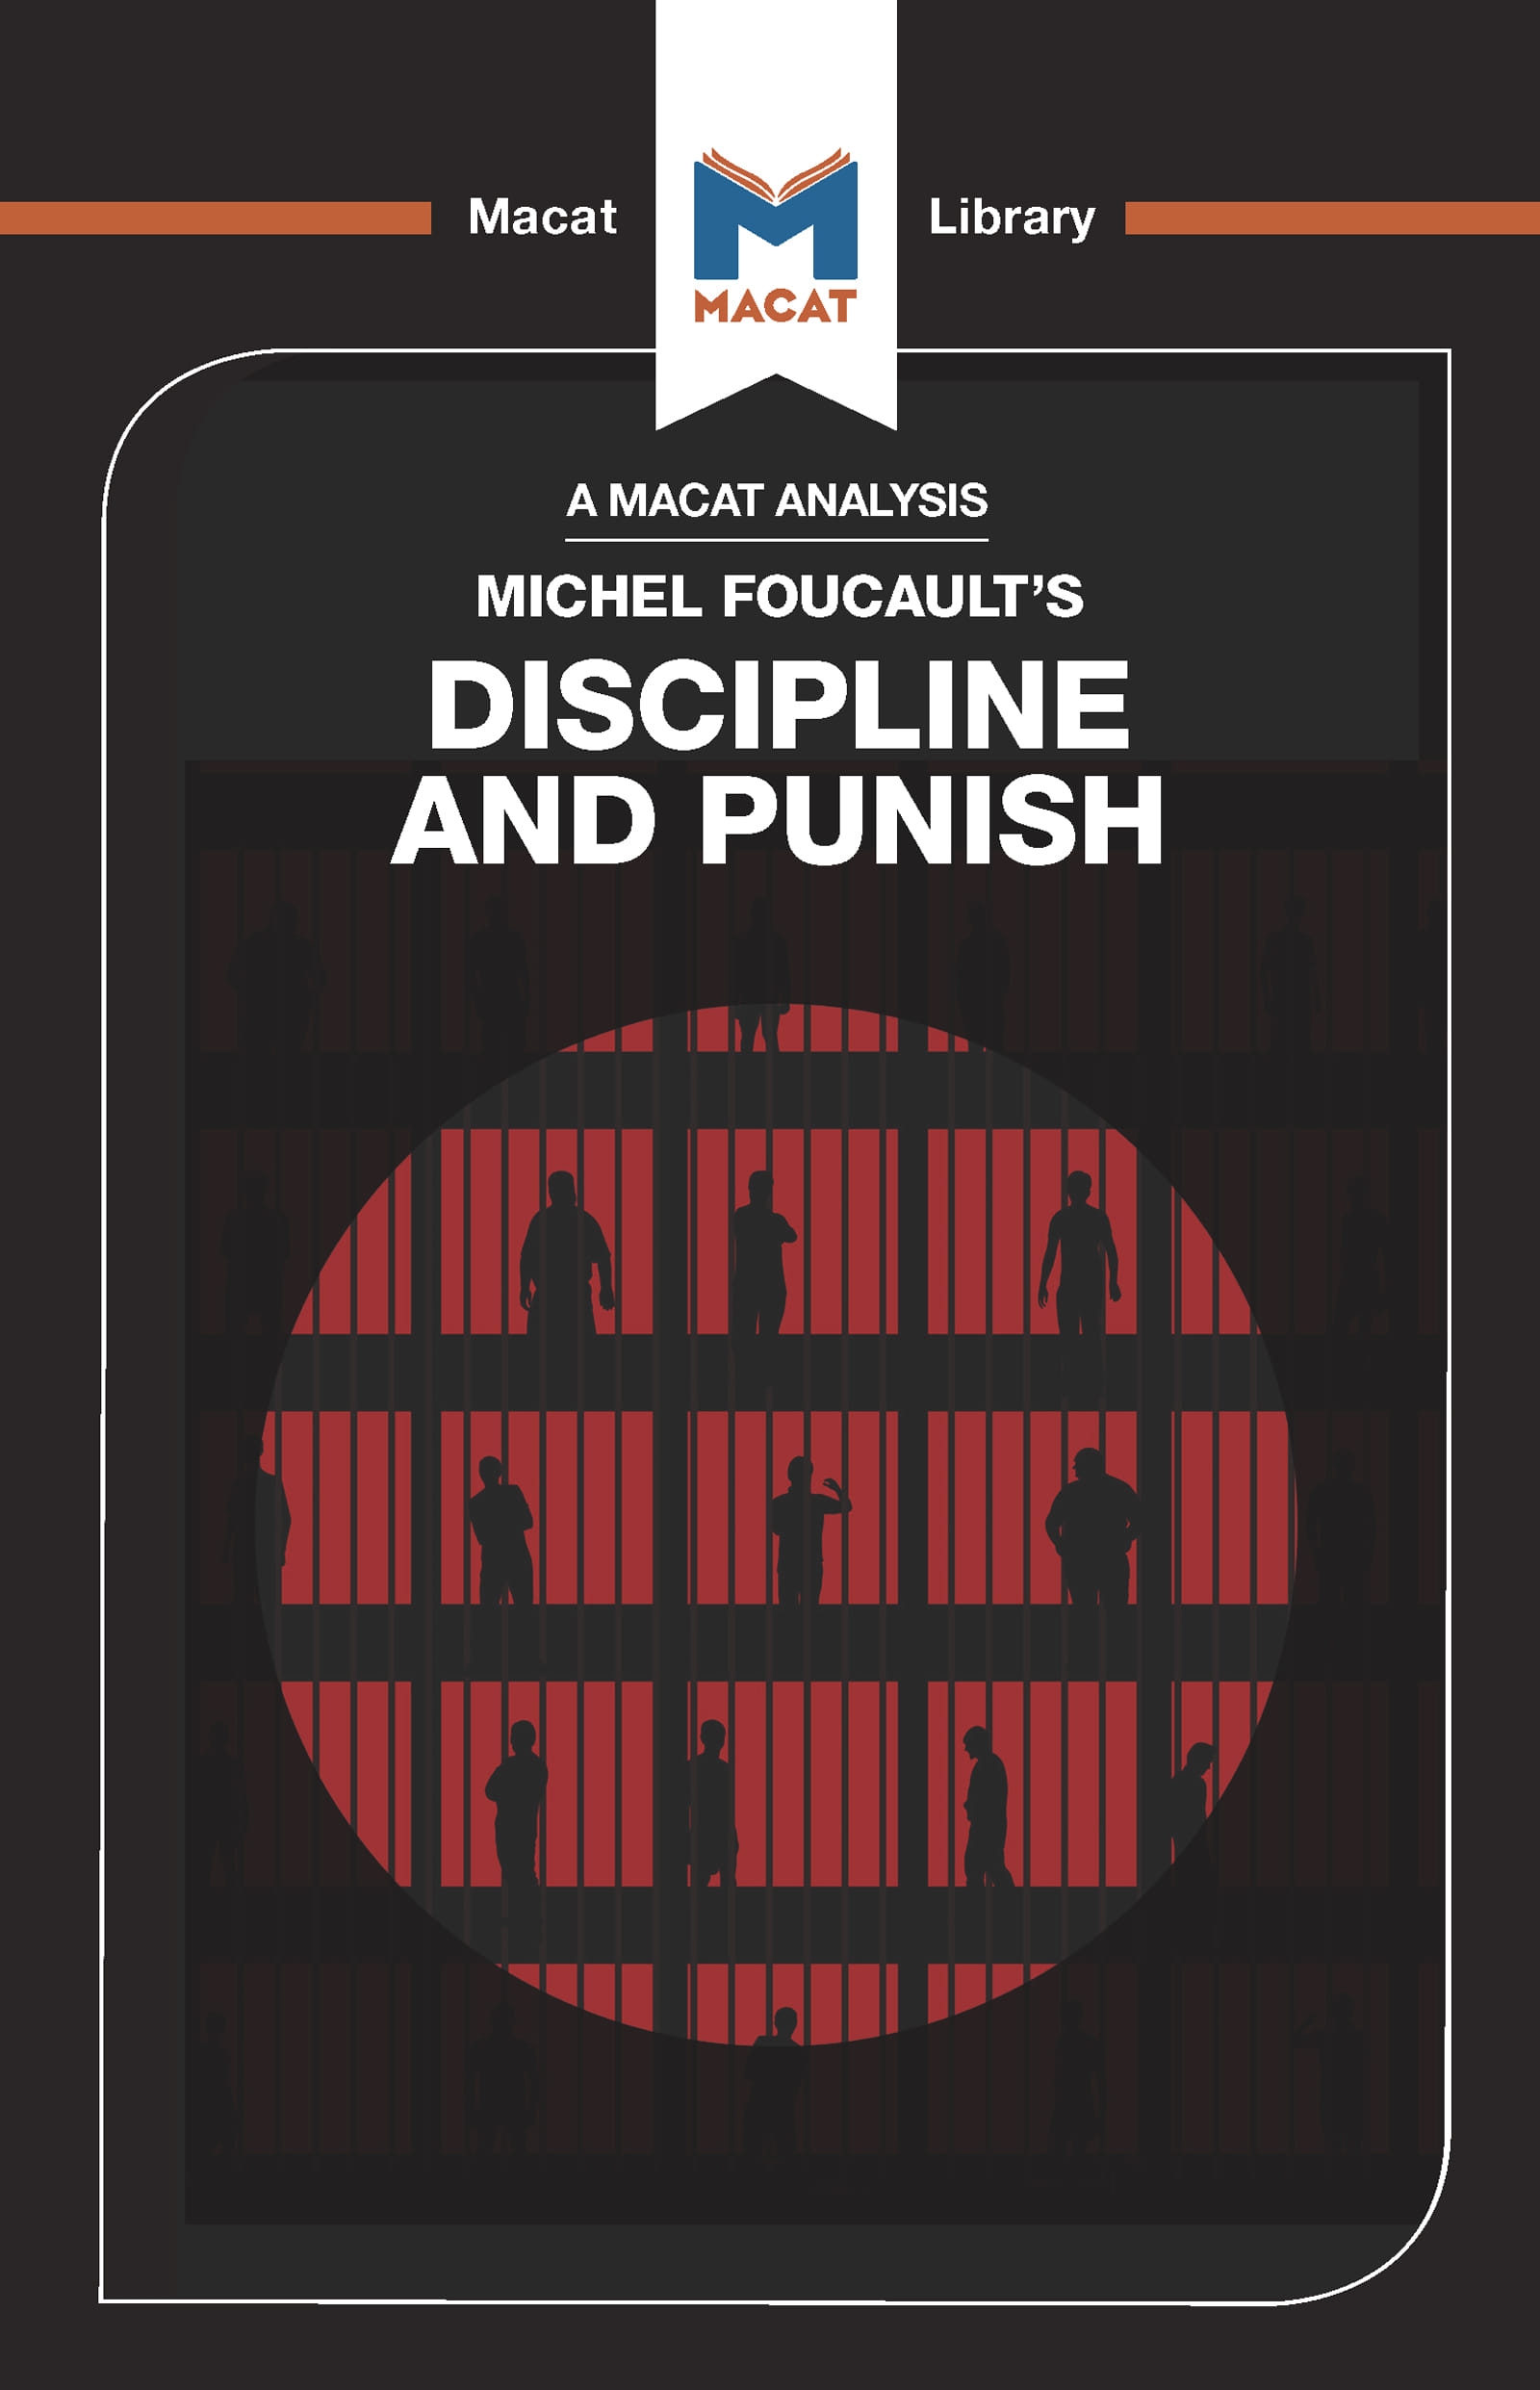 An Macat Analysis of Michel Foucault’s Discipline and Punish